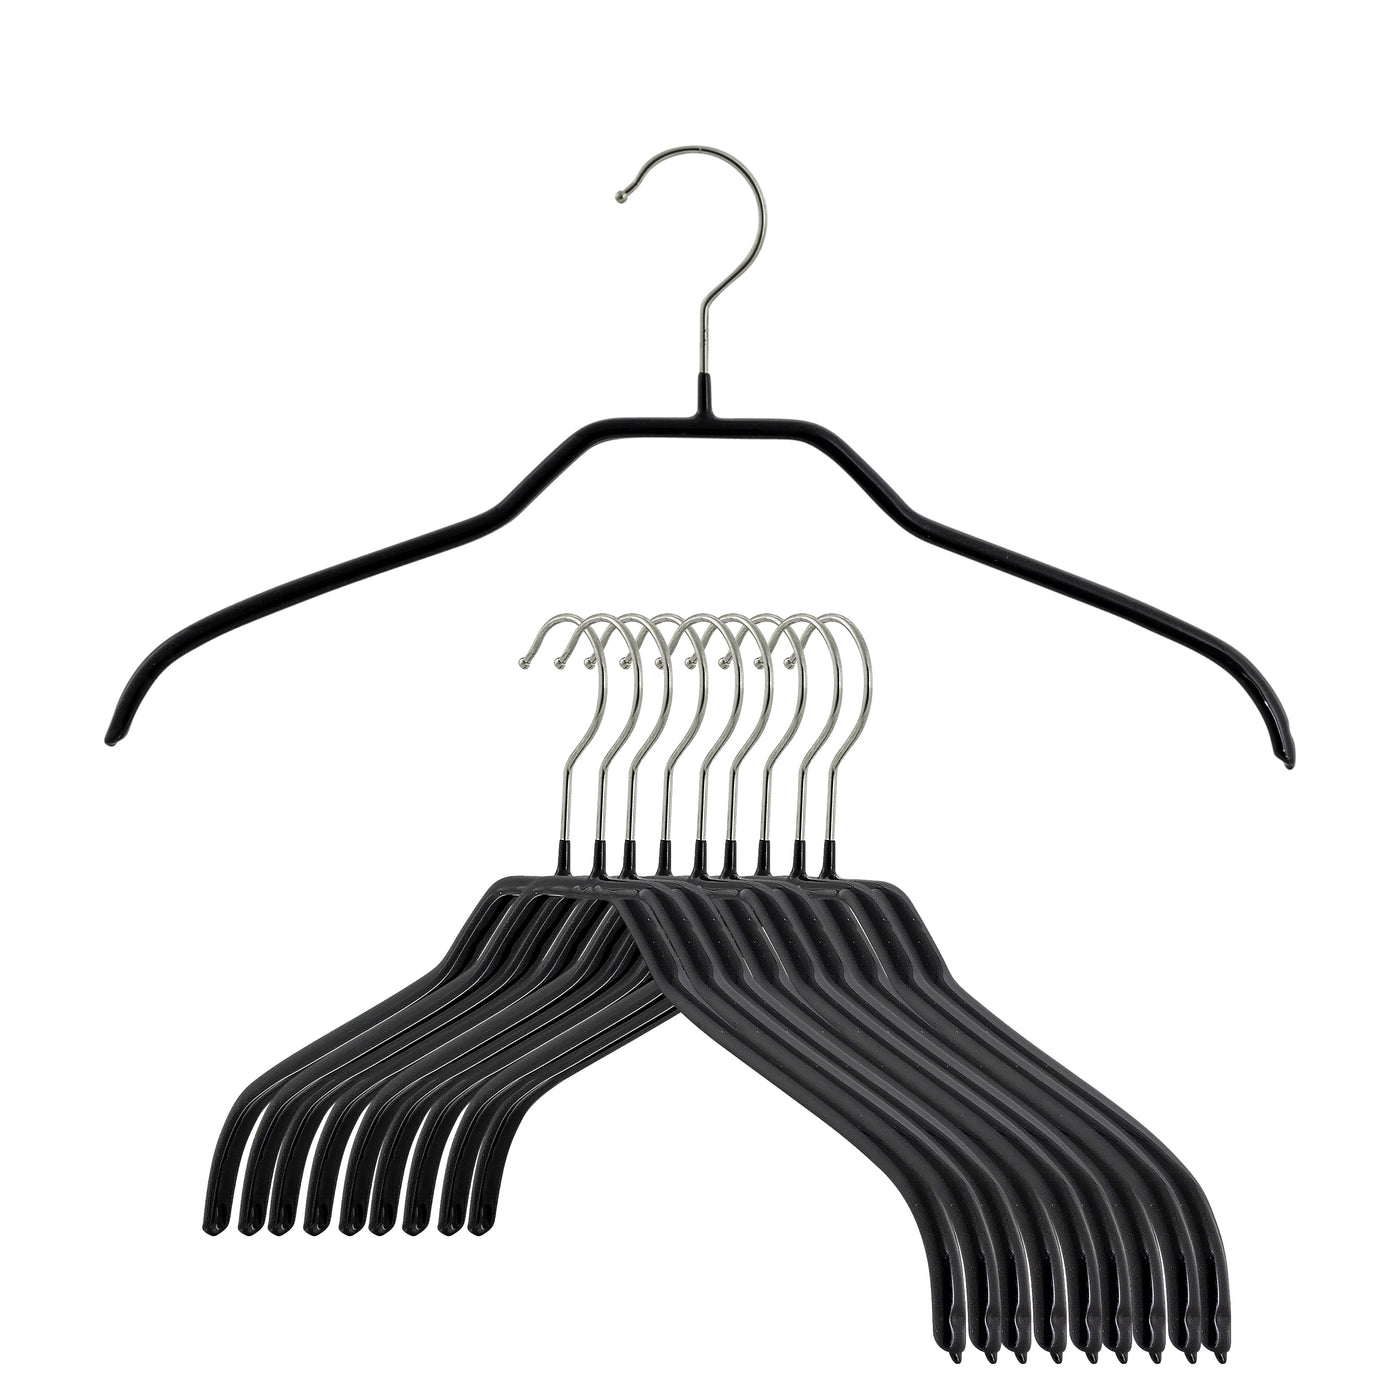 Euro Shirt, Sweater, Steel Non-Slip Clothing Hanger, Narrow Width